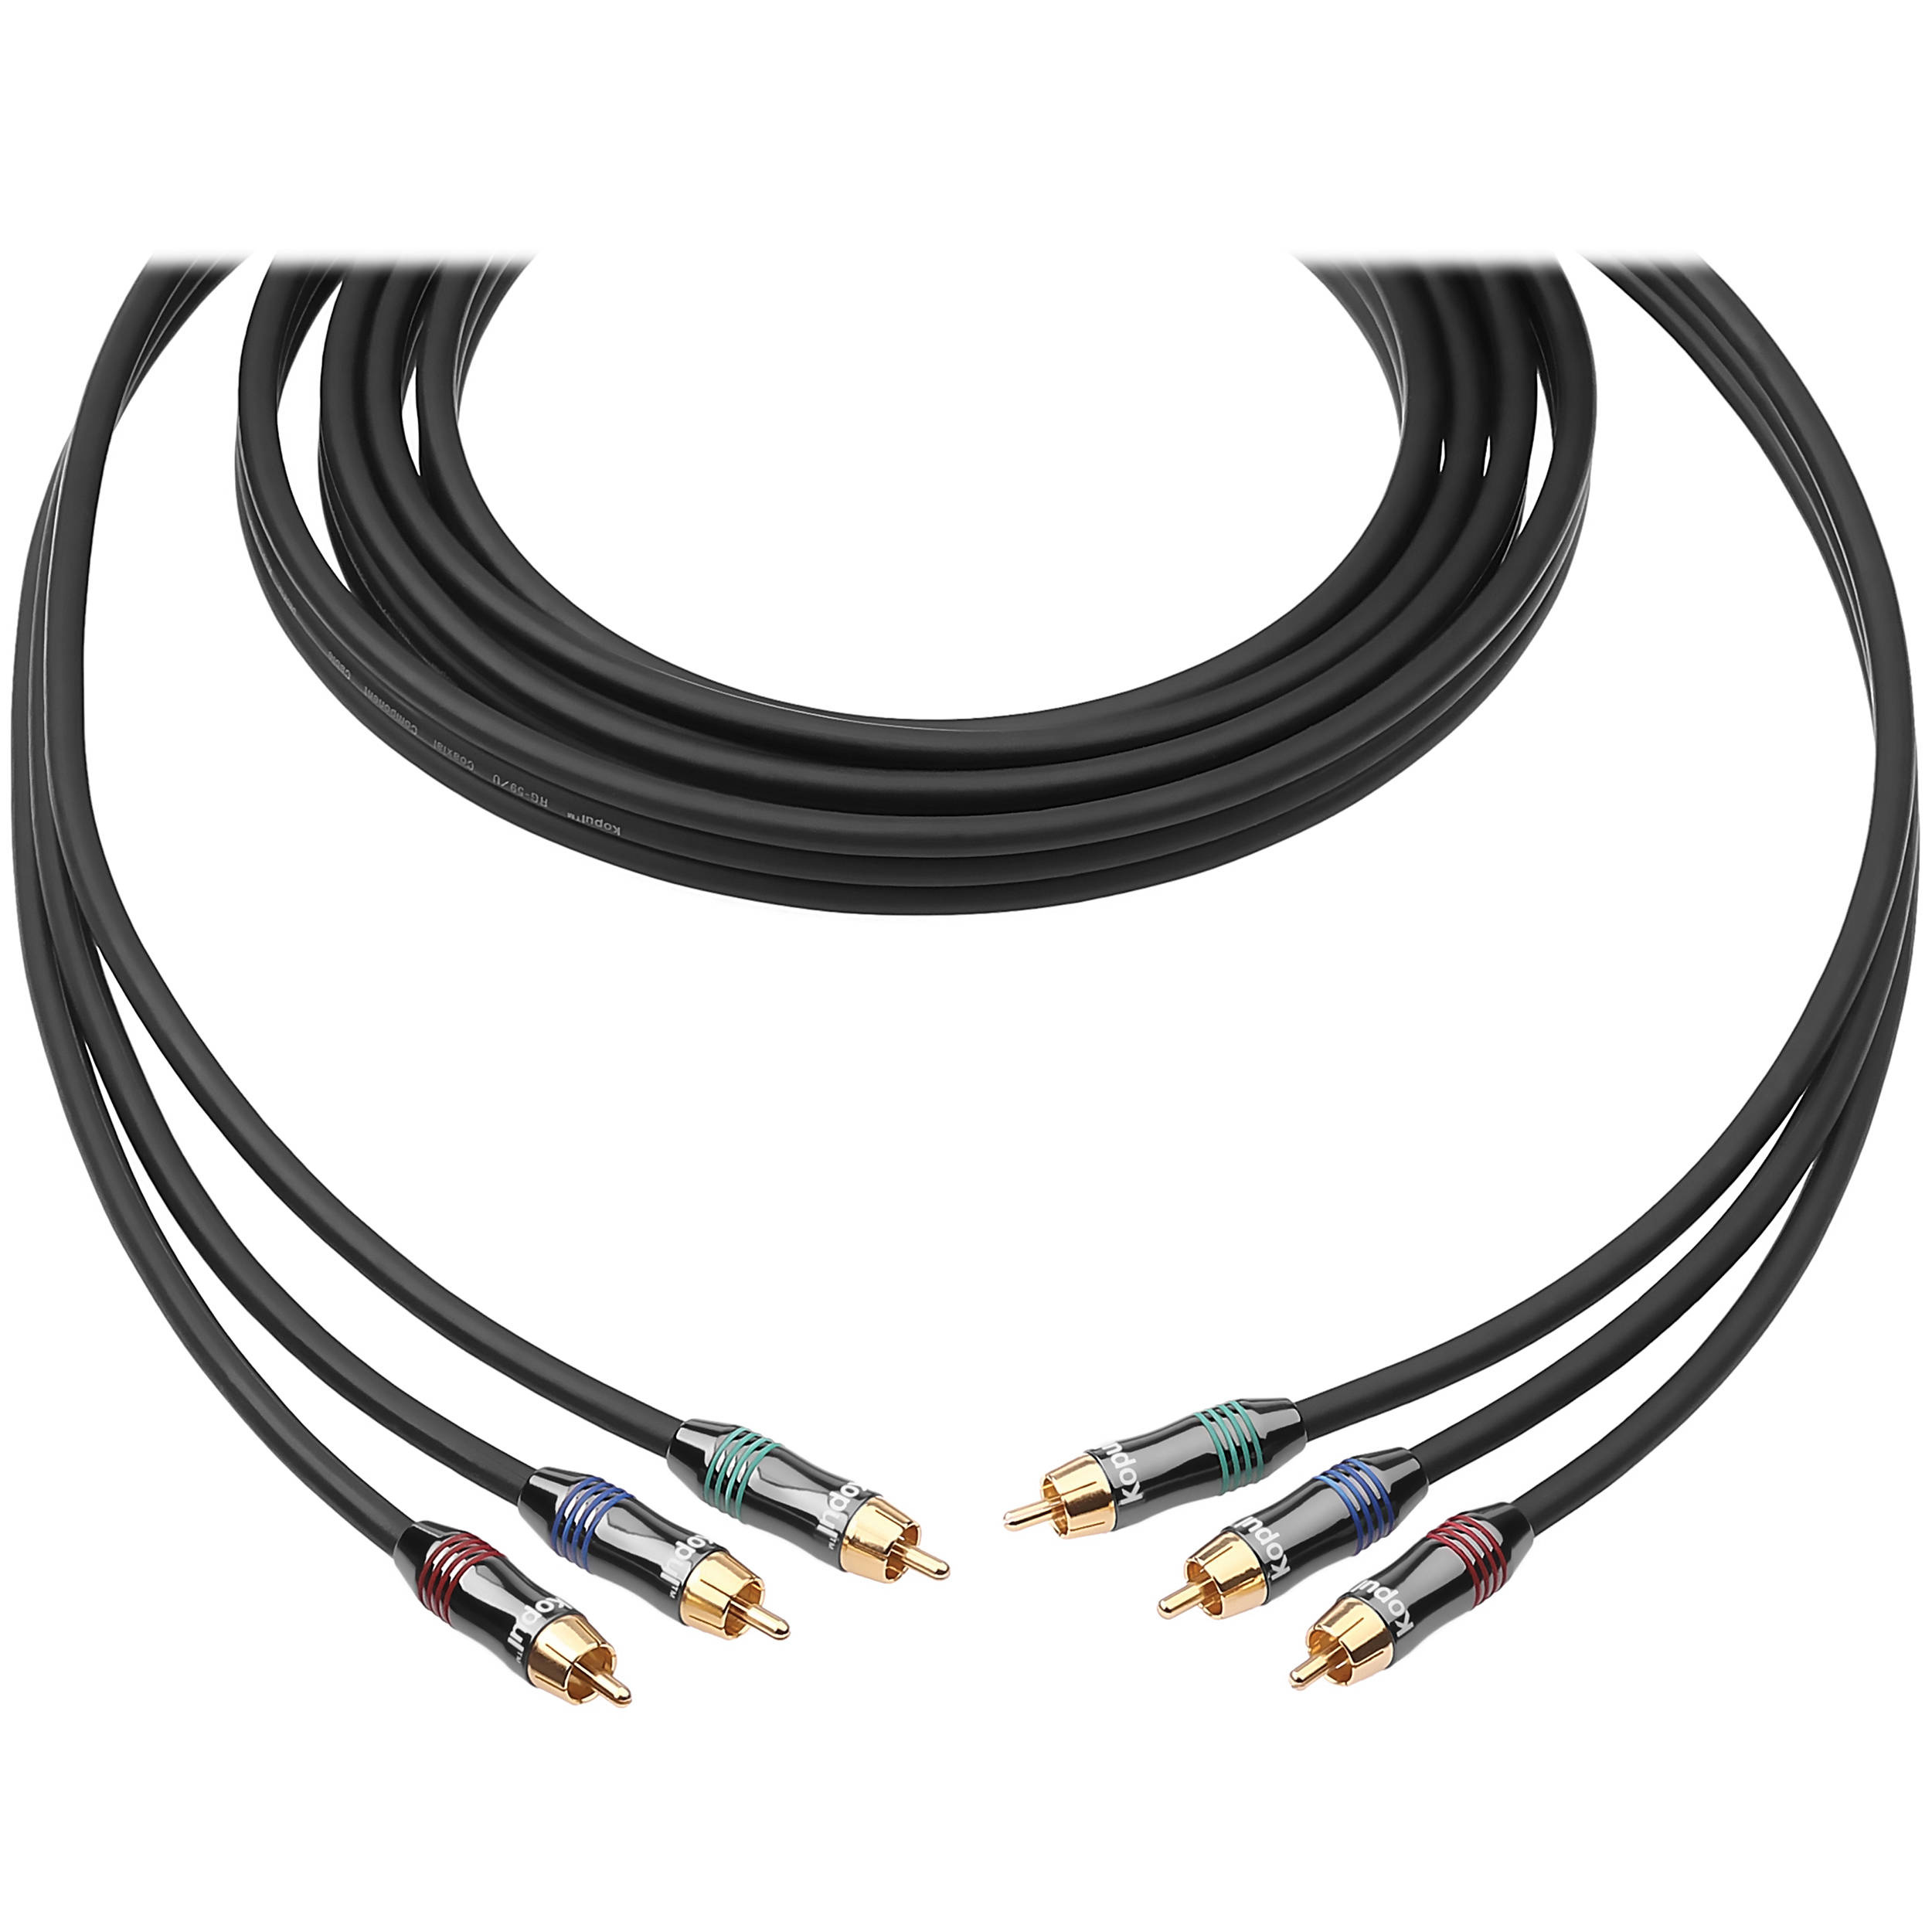 Kopul 25' Premium Series RCA Component Video Cable